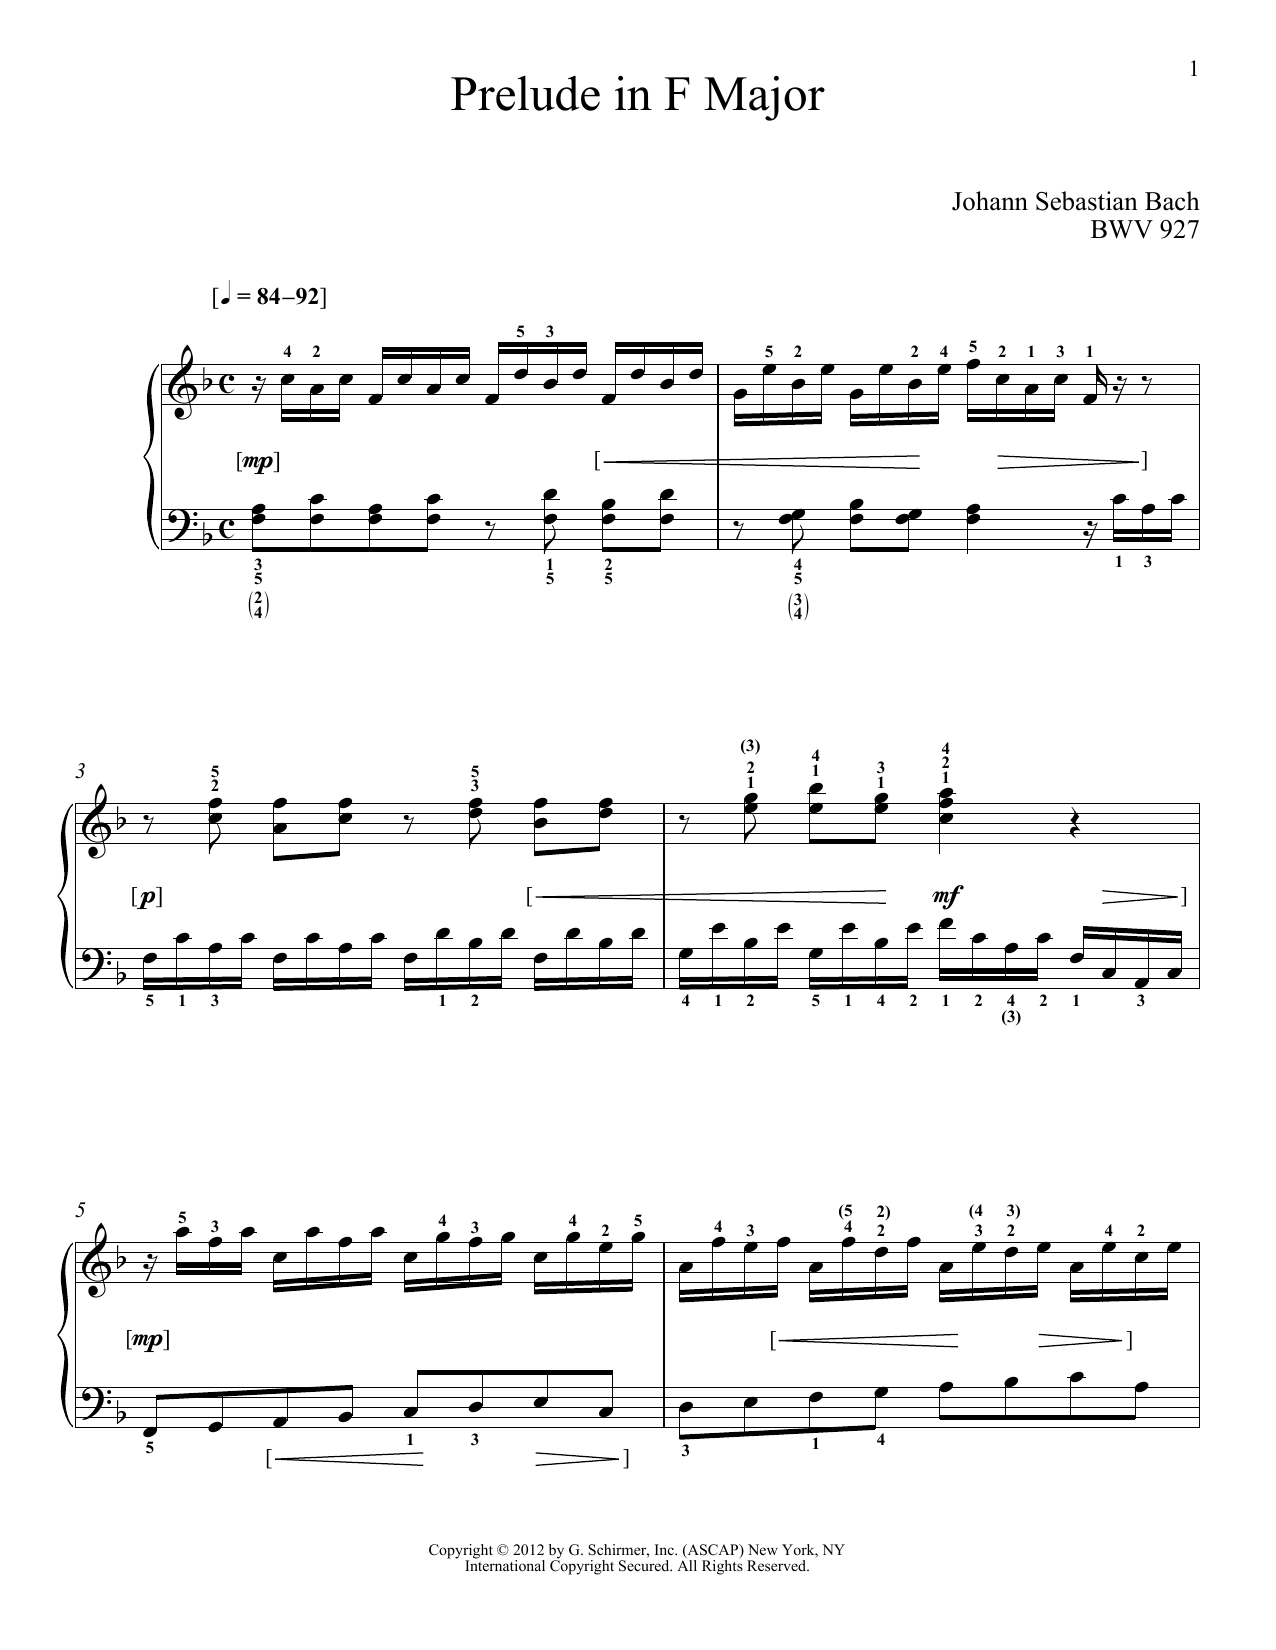 Johann Sebastian Bach Prelude In F Major, BMV 927 Sheet Music Notes & Chords for Piano - Download or Print PDF